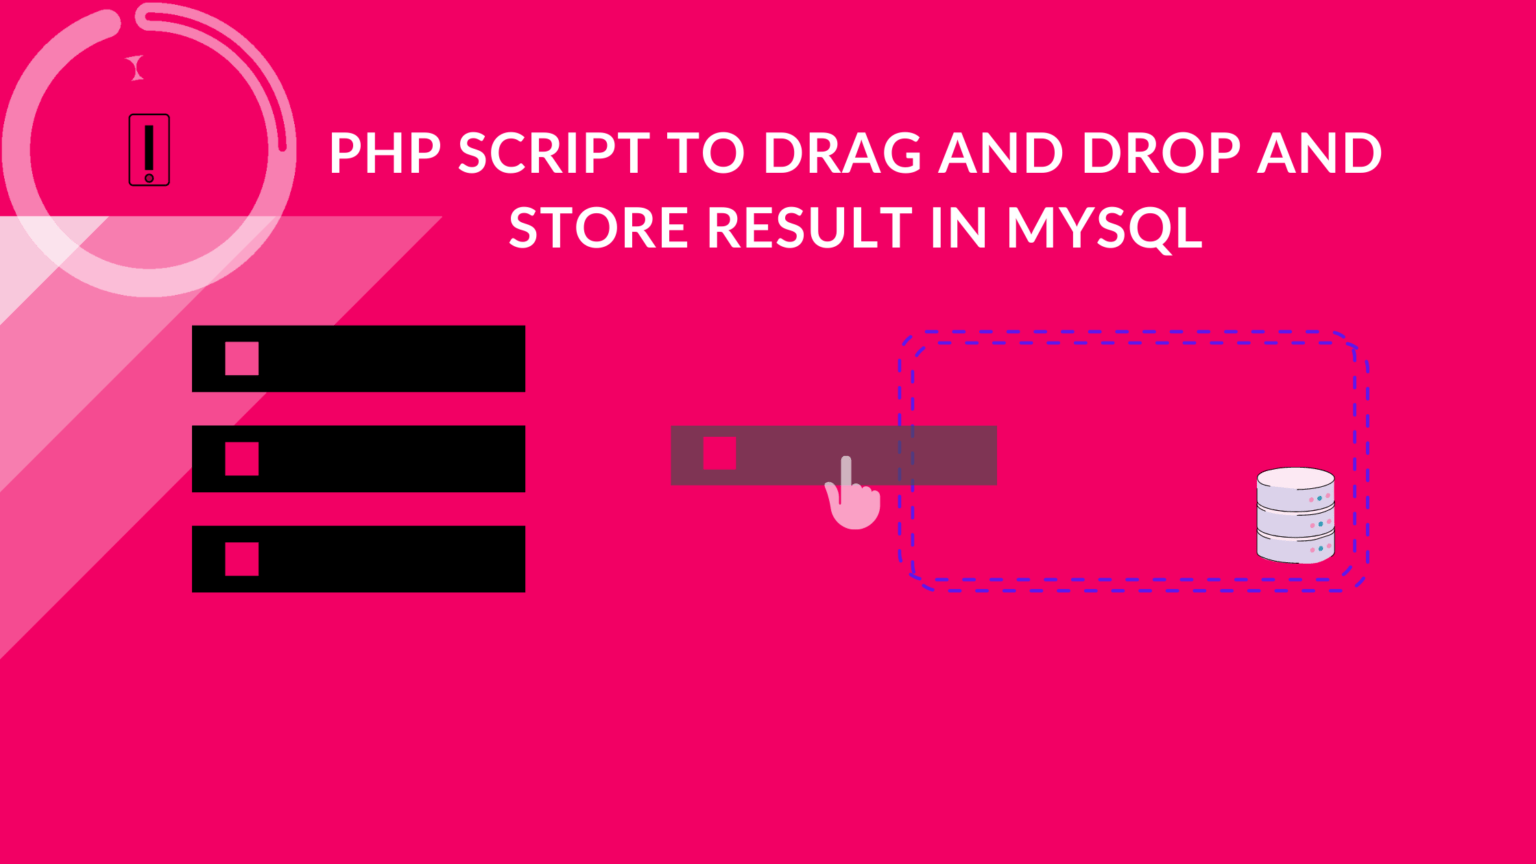 Remove script. Клавиша Drag and Drop. Drag and Drop js php. Див дроп.